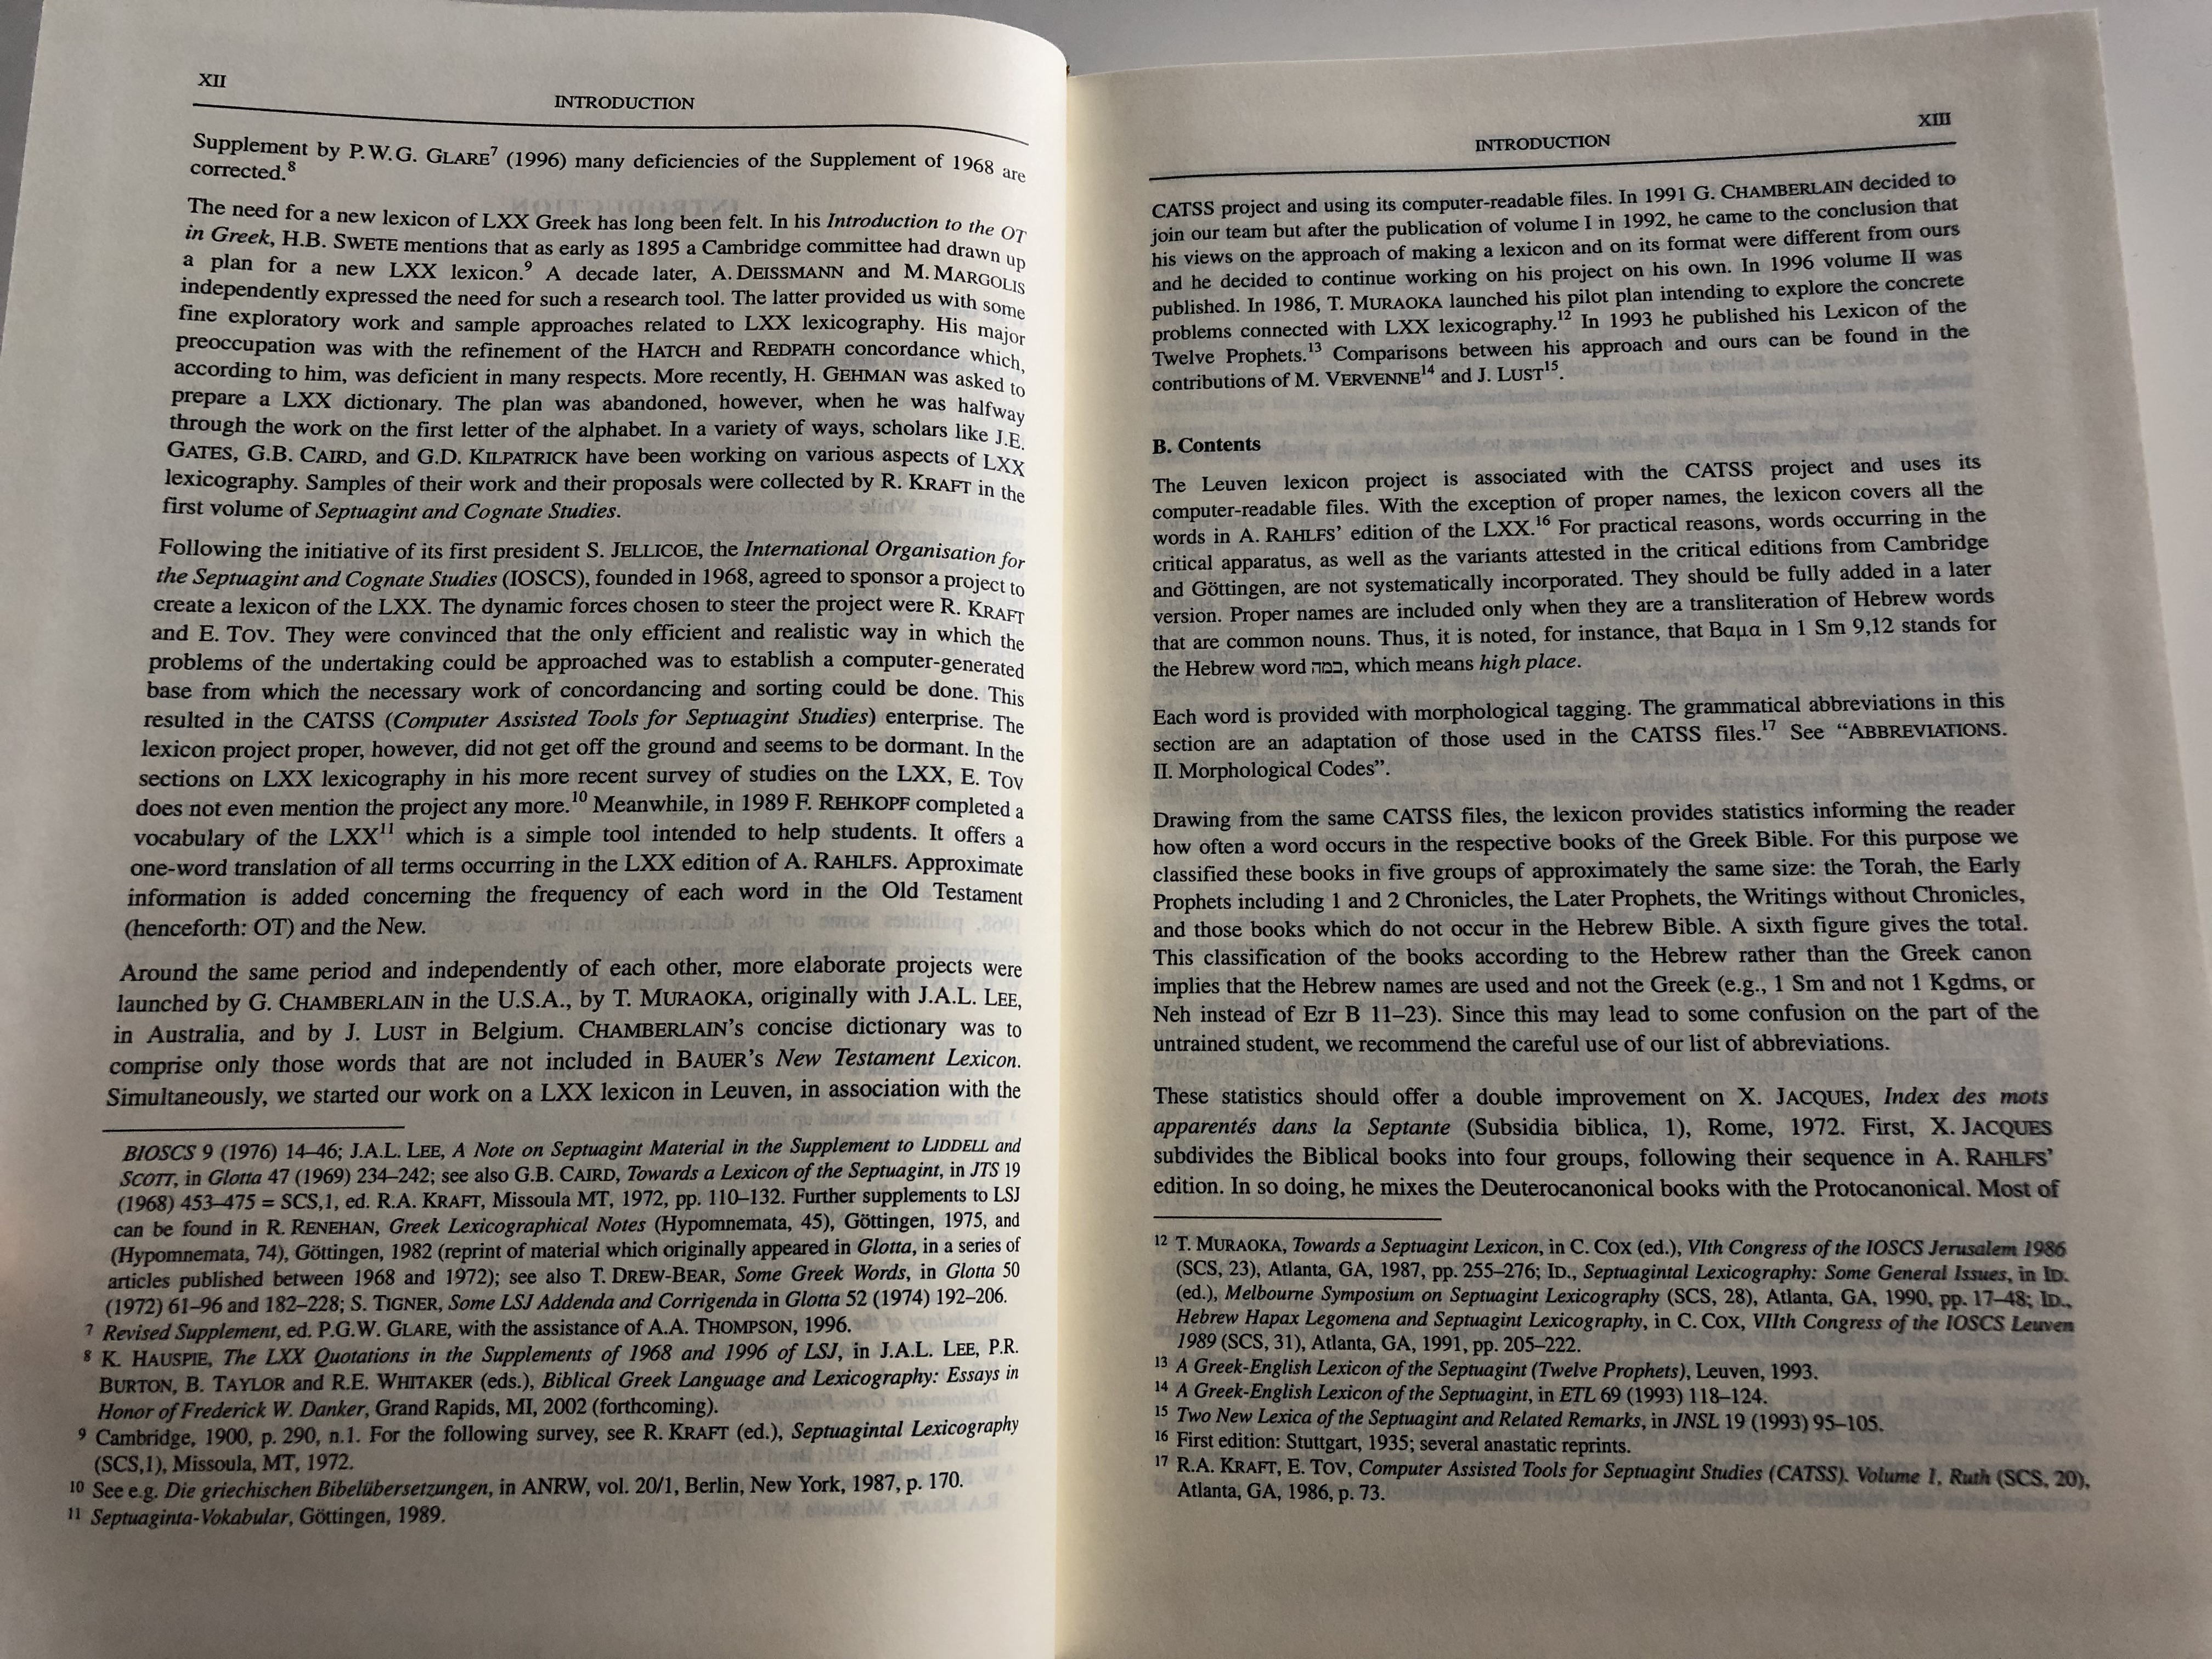 greek-english-lexicon-of-the-septuagint-revised-edition-compiled-by-johan-lust-erik-eynikel-katrin-hauspie-deutsche-bibelgesellschaft-hardcover-2003-11-.jpg